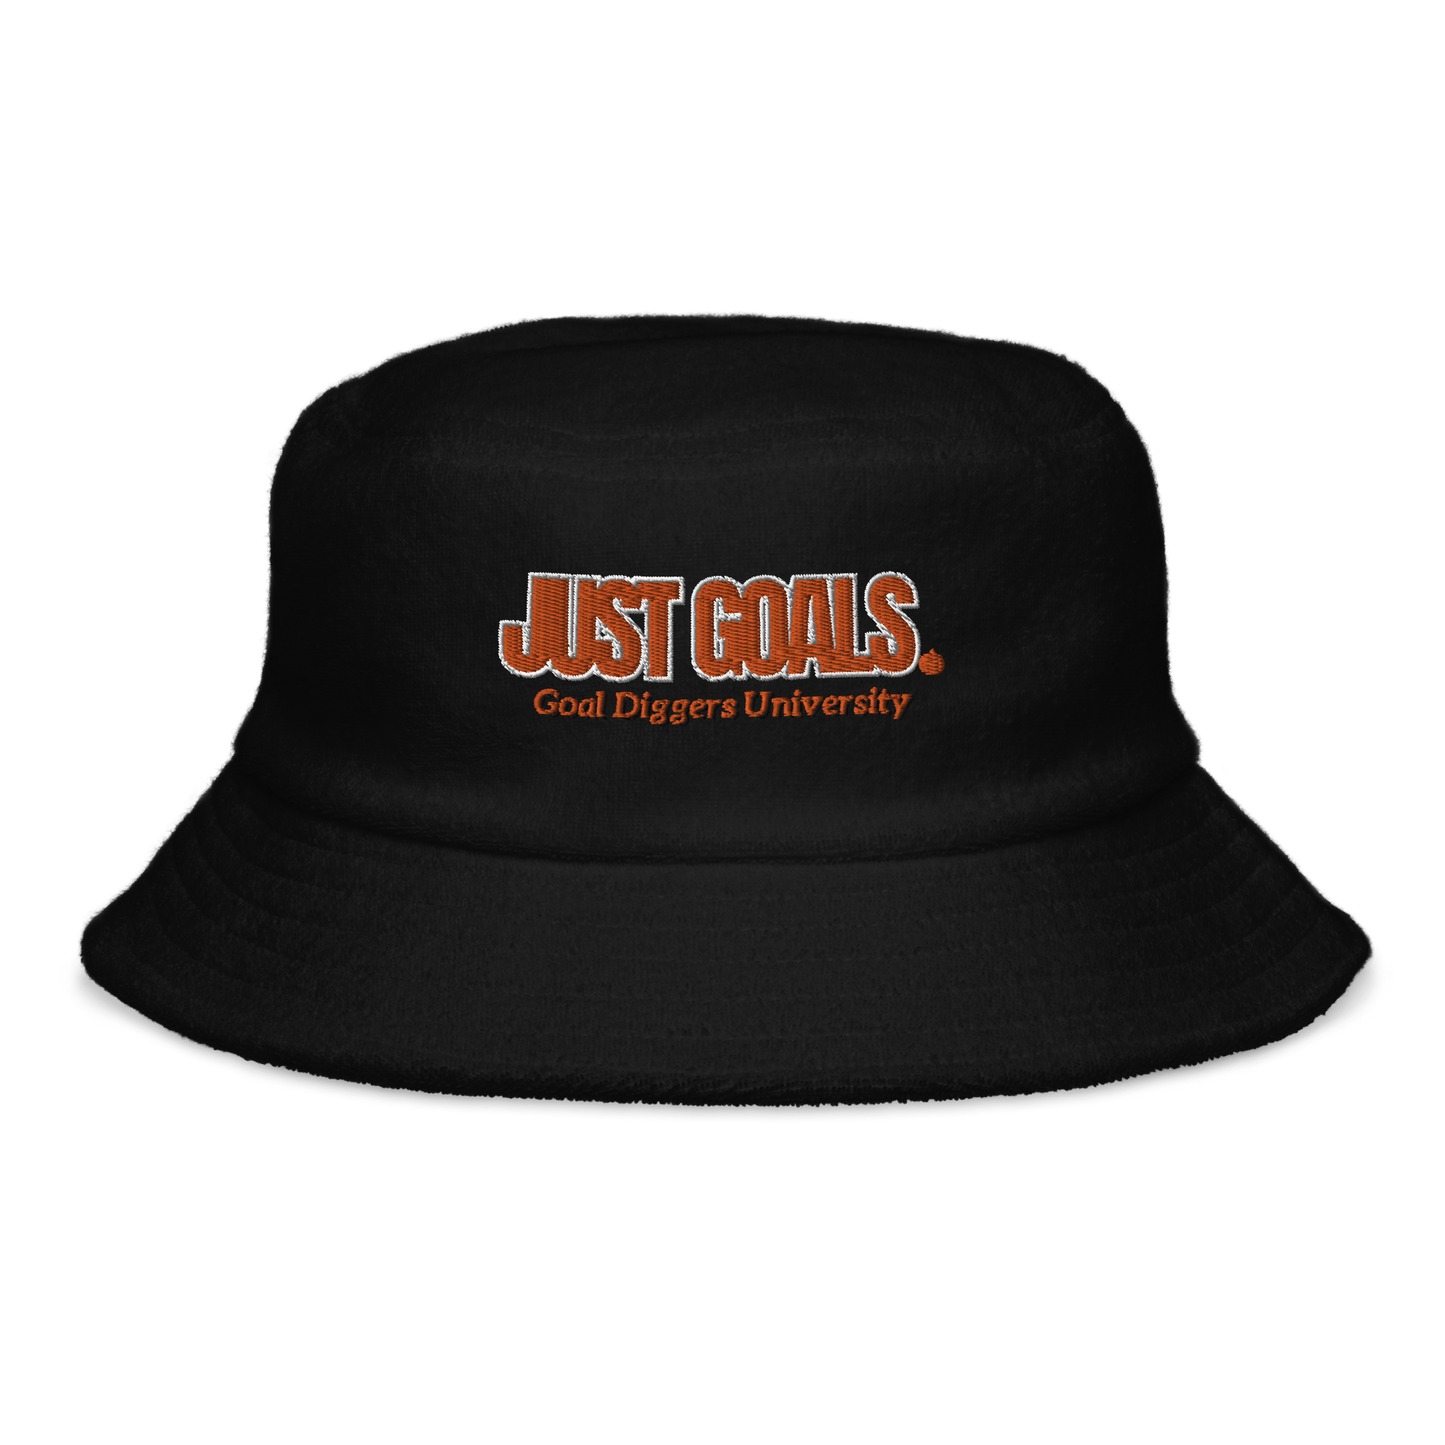 🎃 JUST GOALS - terry cloth bucket hat 2